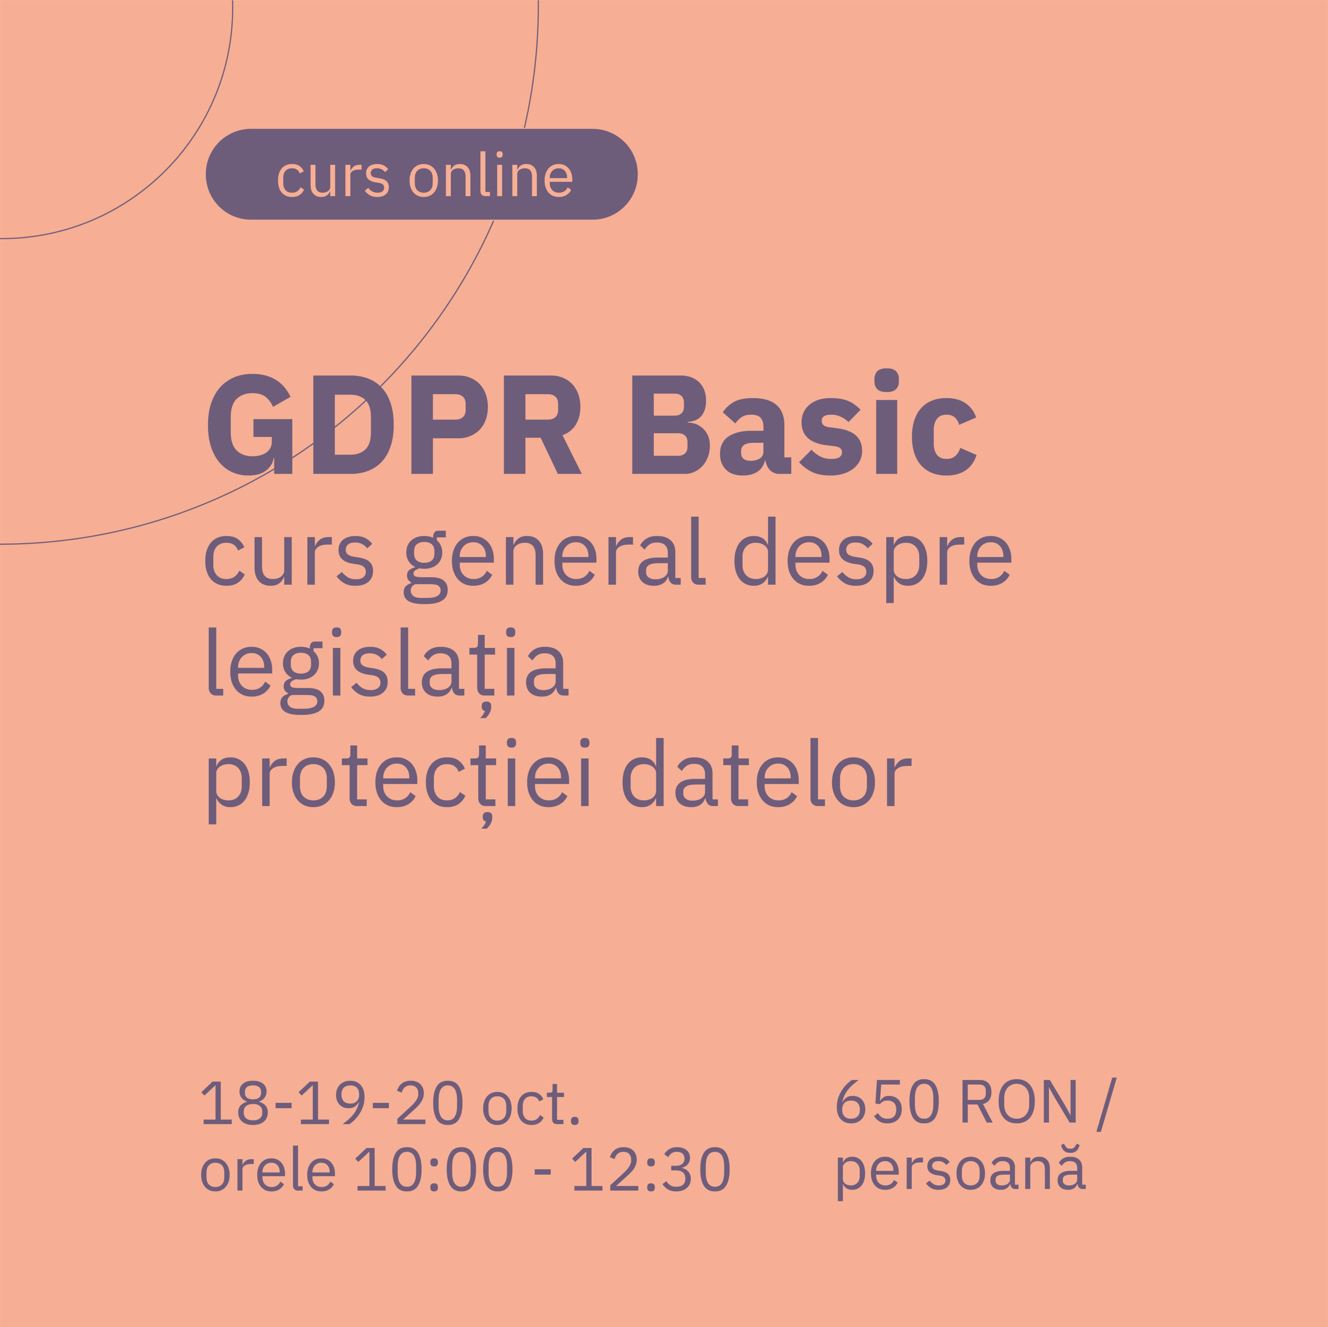 GDPR Basic - curs general online despre legislatia protectiei datelor si GDPR - privacylearning.ro